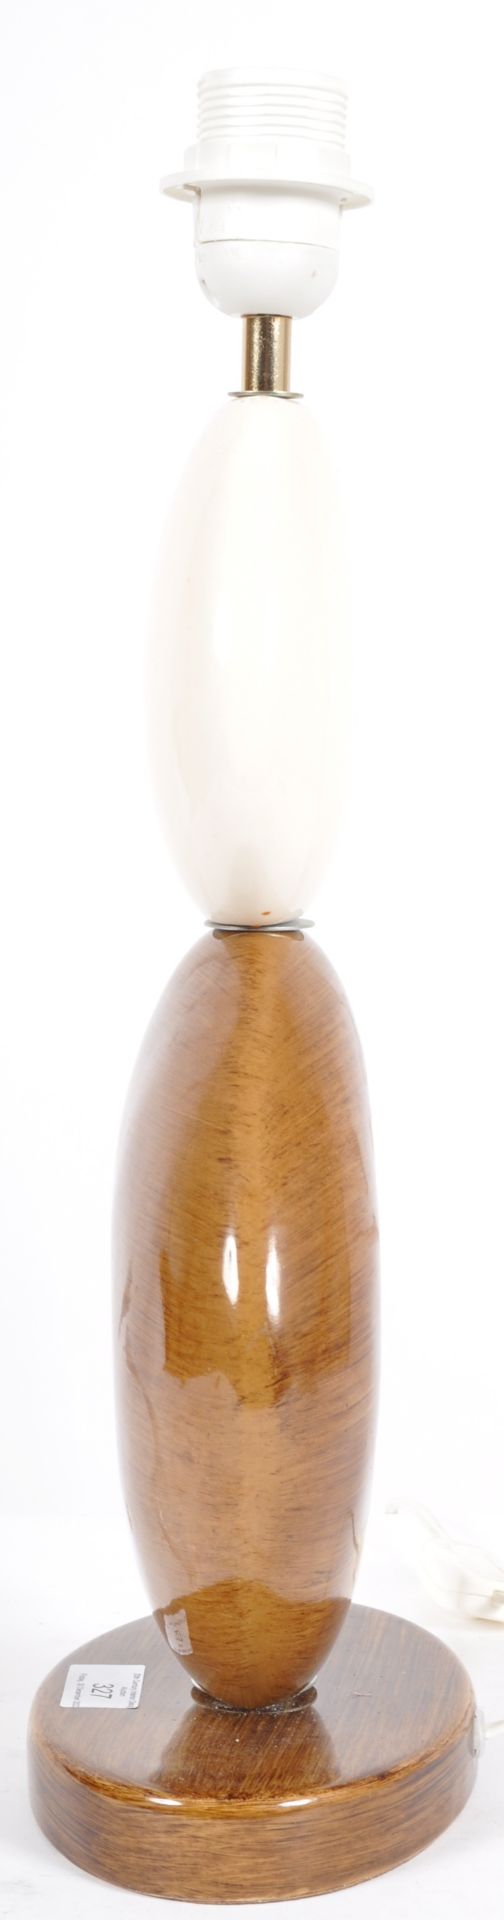 CONTEMPORARY DESIGNER CERAMIC PEBBLE TABLE LAMP - Image 4 of 8